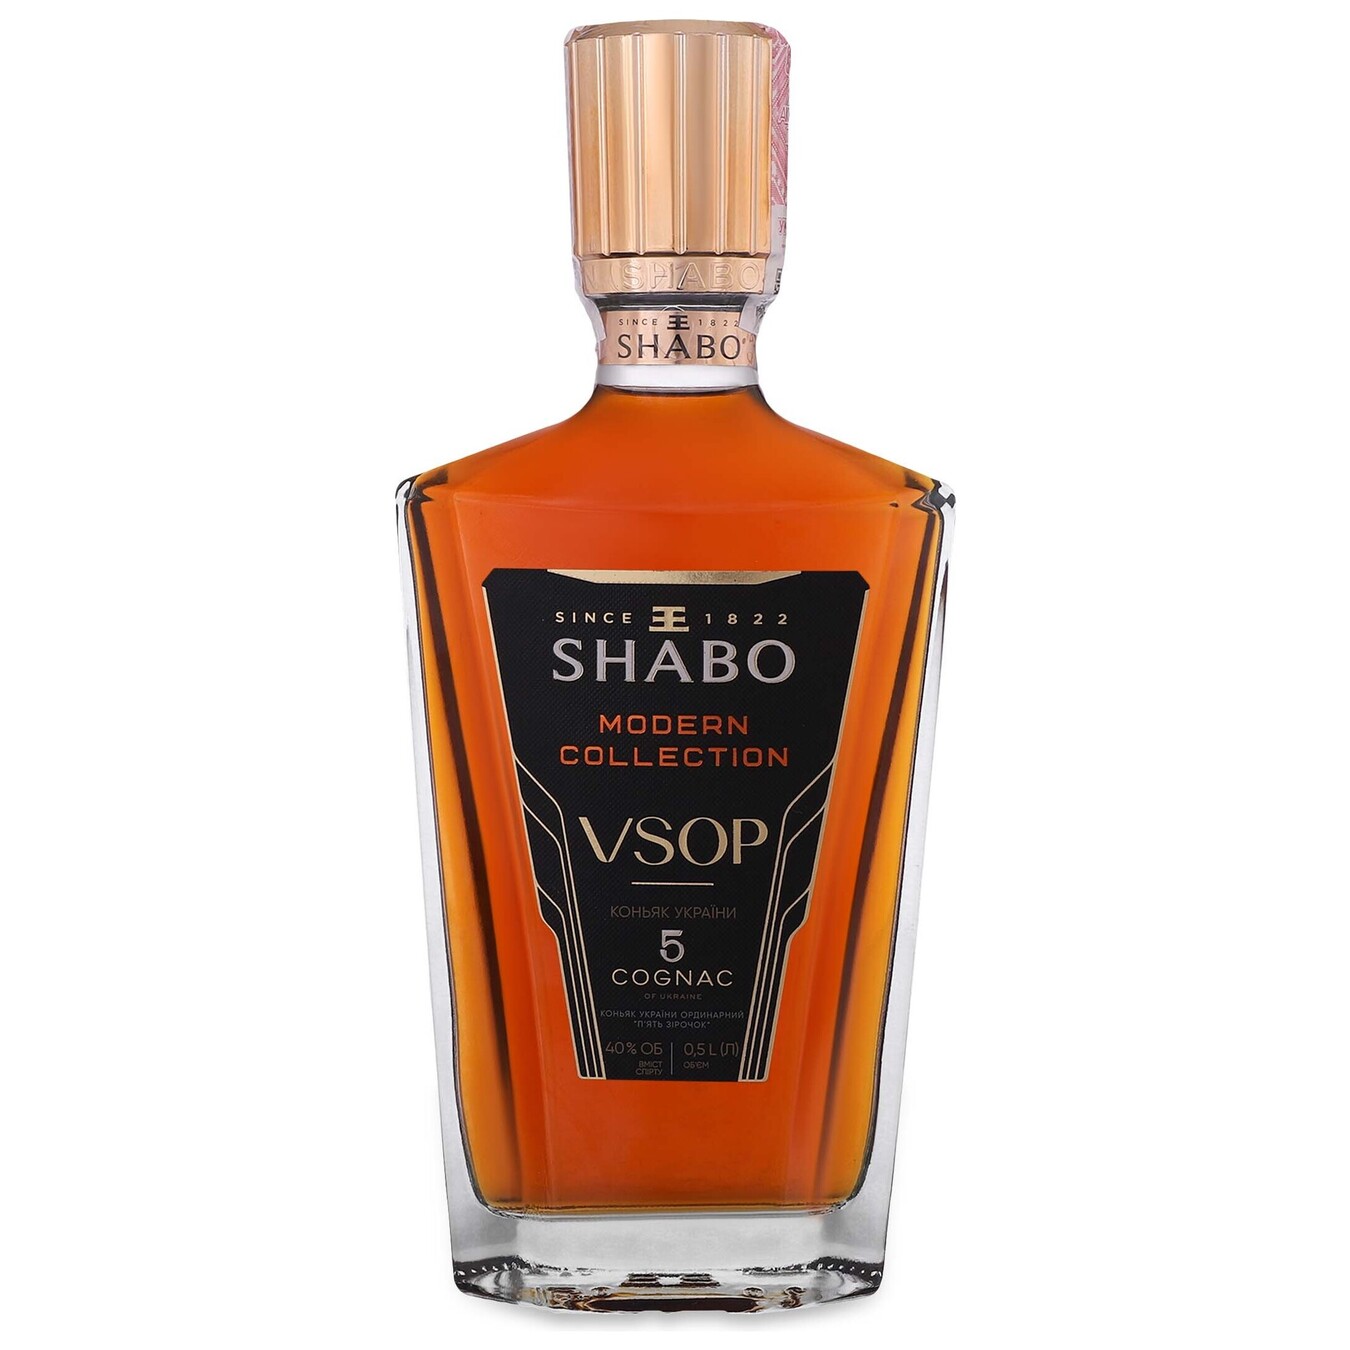 Shabo Cognac Modern Collection 5* 40% 0.5l